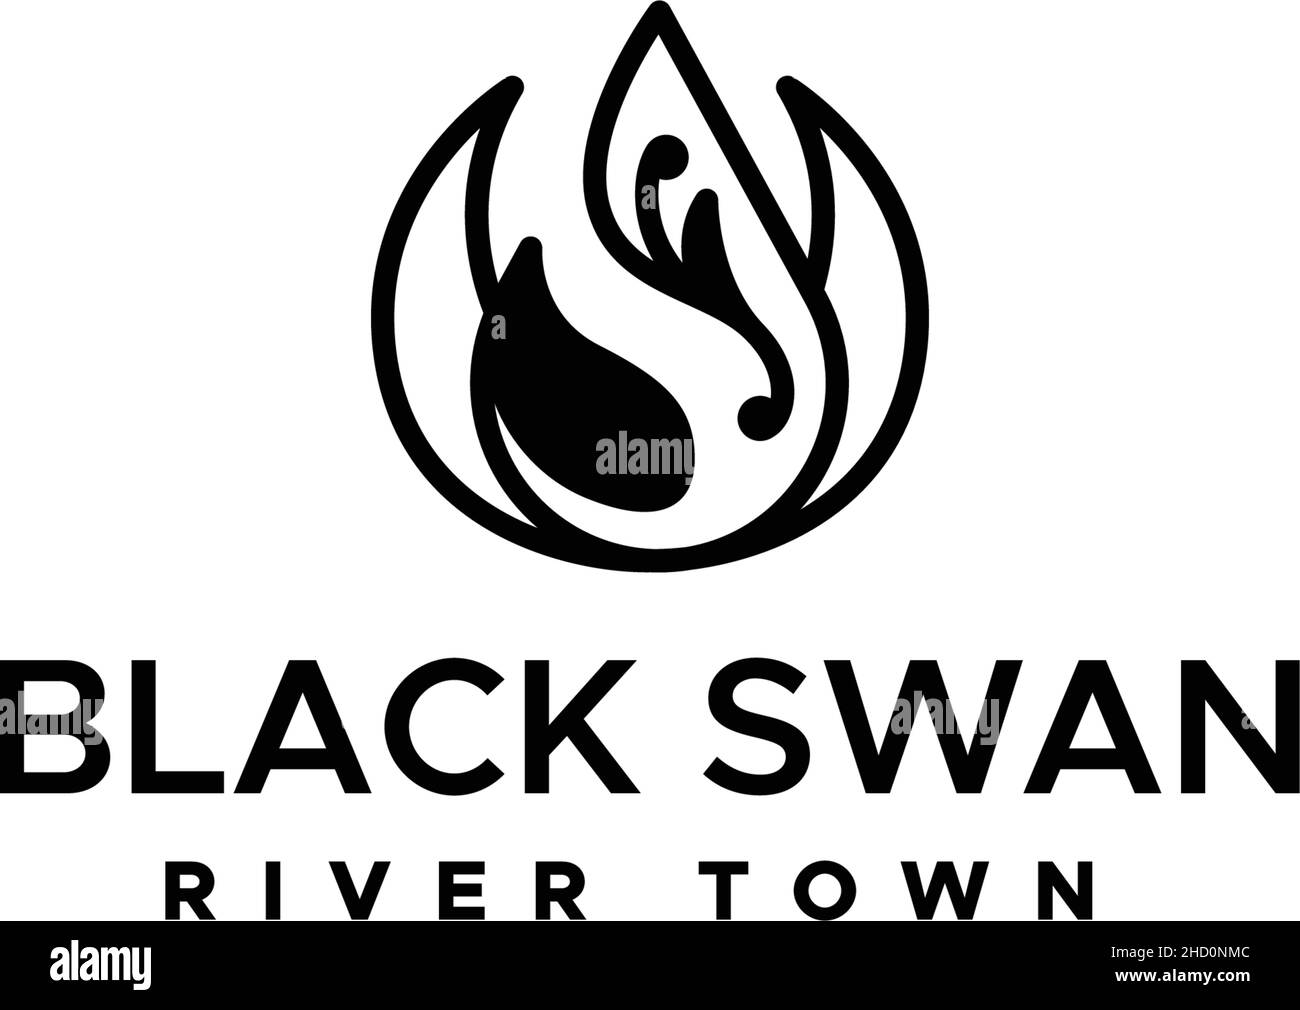 Flat silhouette BLACK SWAM RIVER TOWN logo design Stock Vector